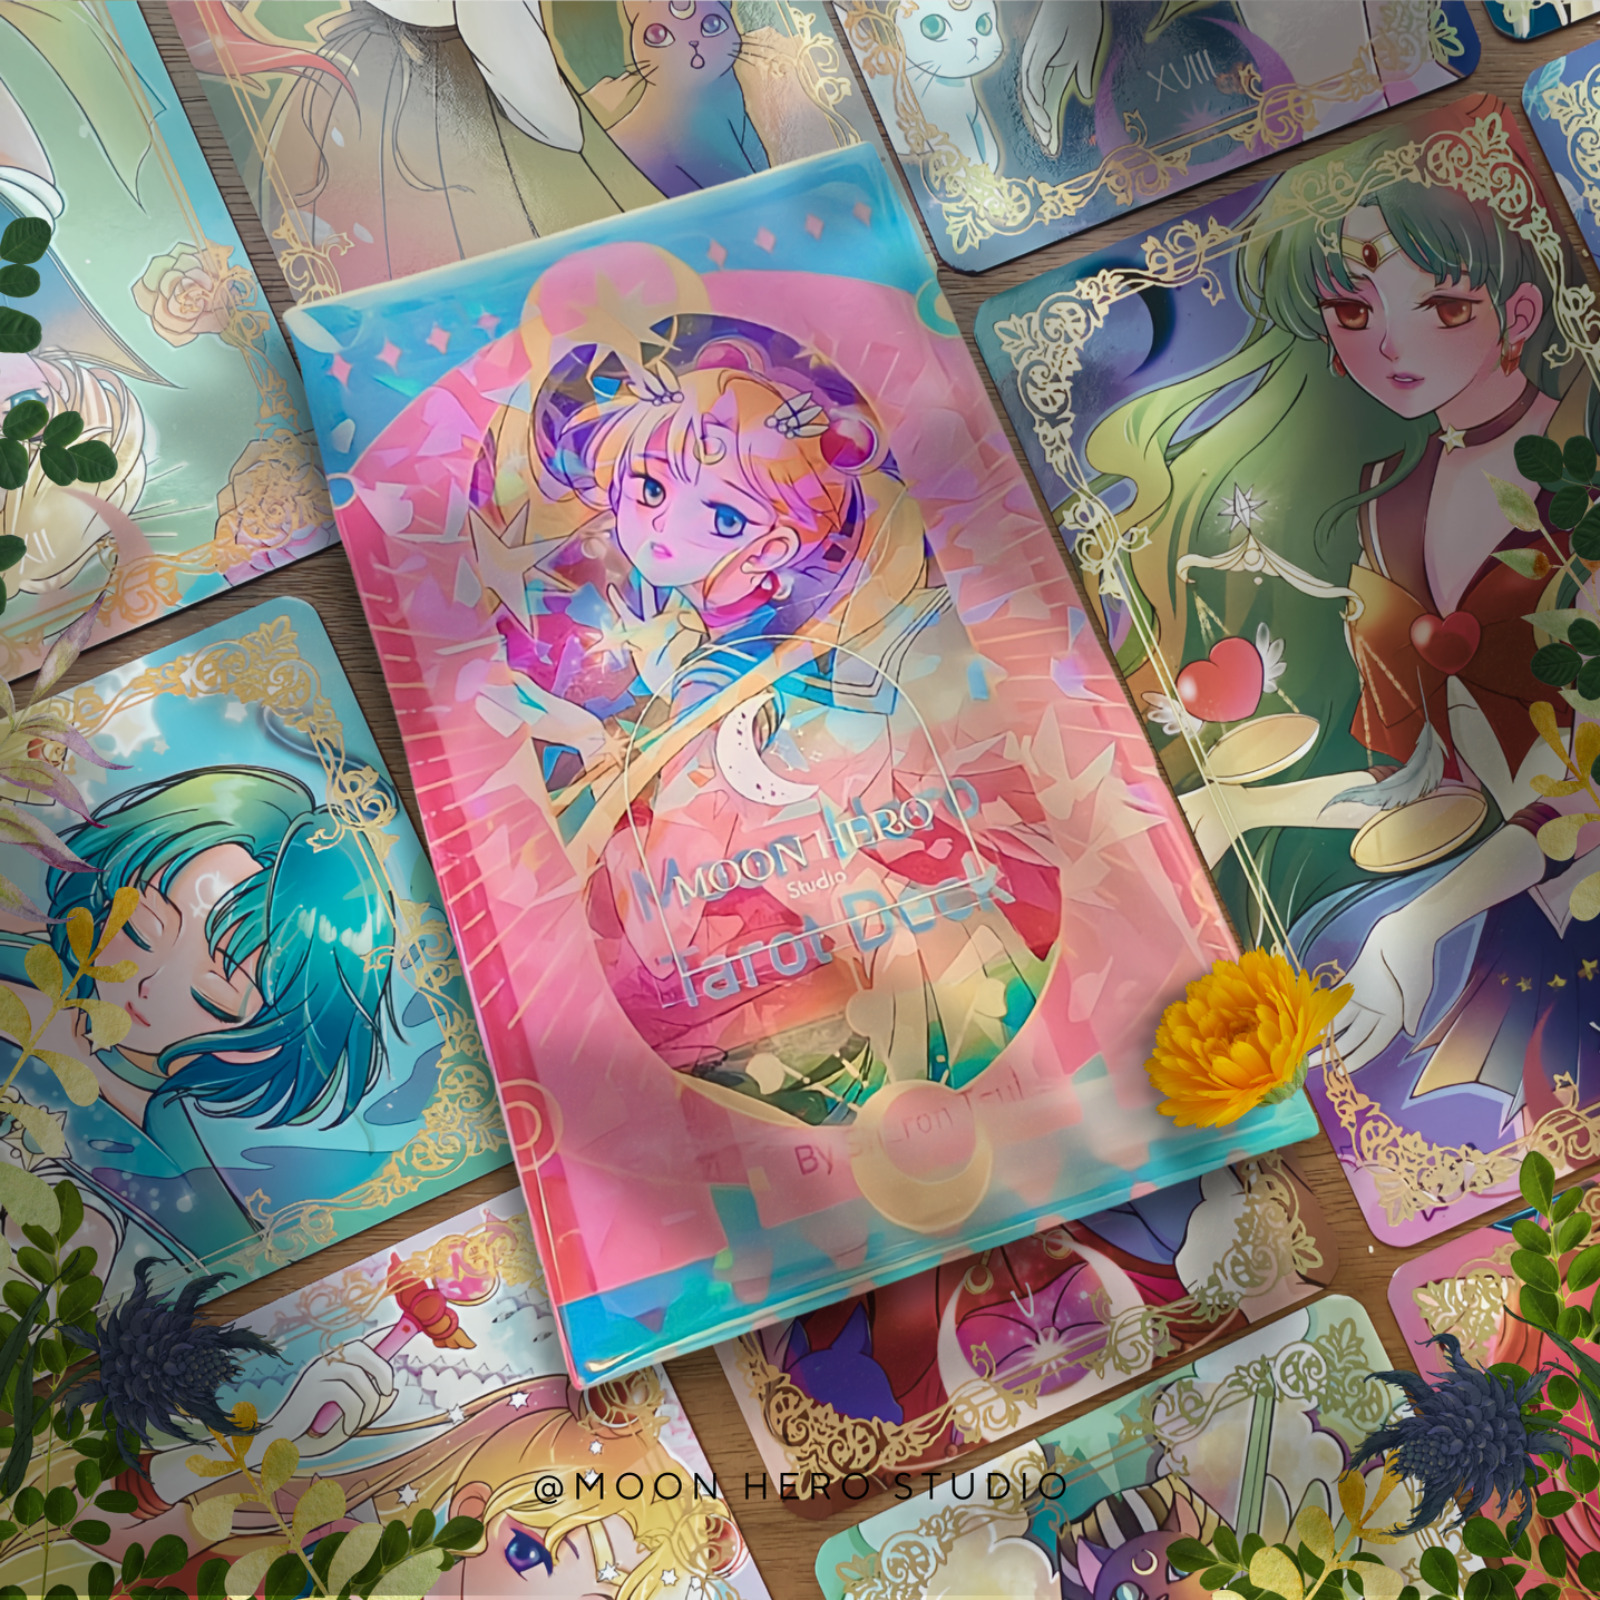 Moon Hero Tarot Deck 23 Major Arcana Sailormoon art with booklet (2nd version)